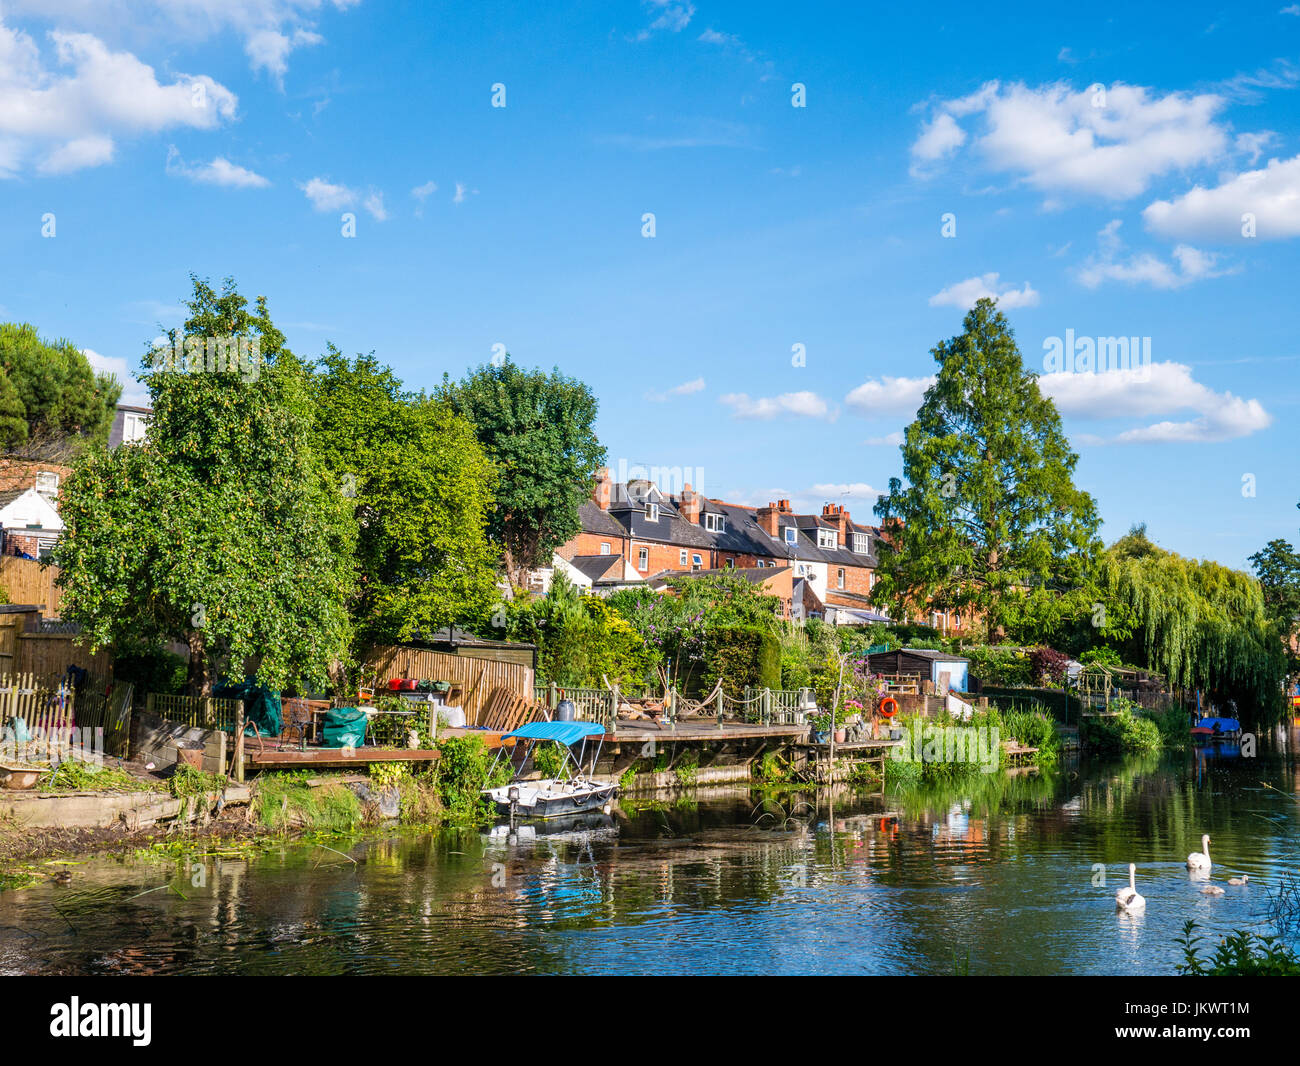 Vivienda terraza y jardines, el Río Kennett, Reading, Berkshire, Inglaterra Foto de stock